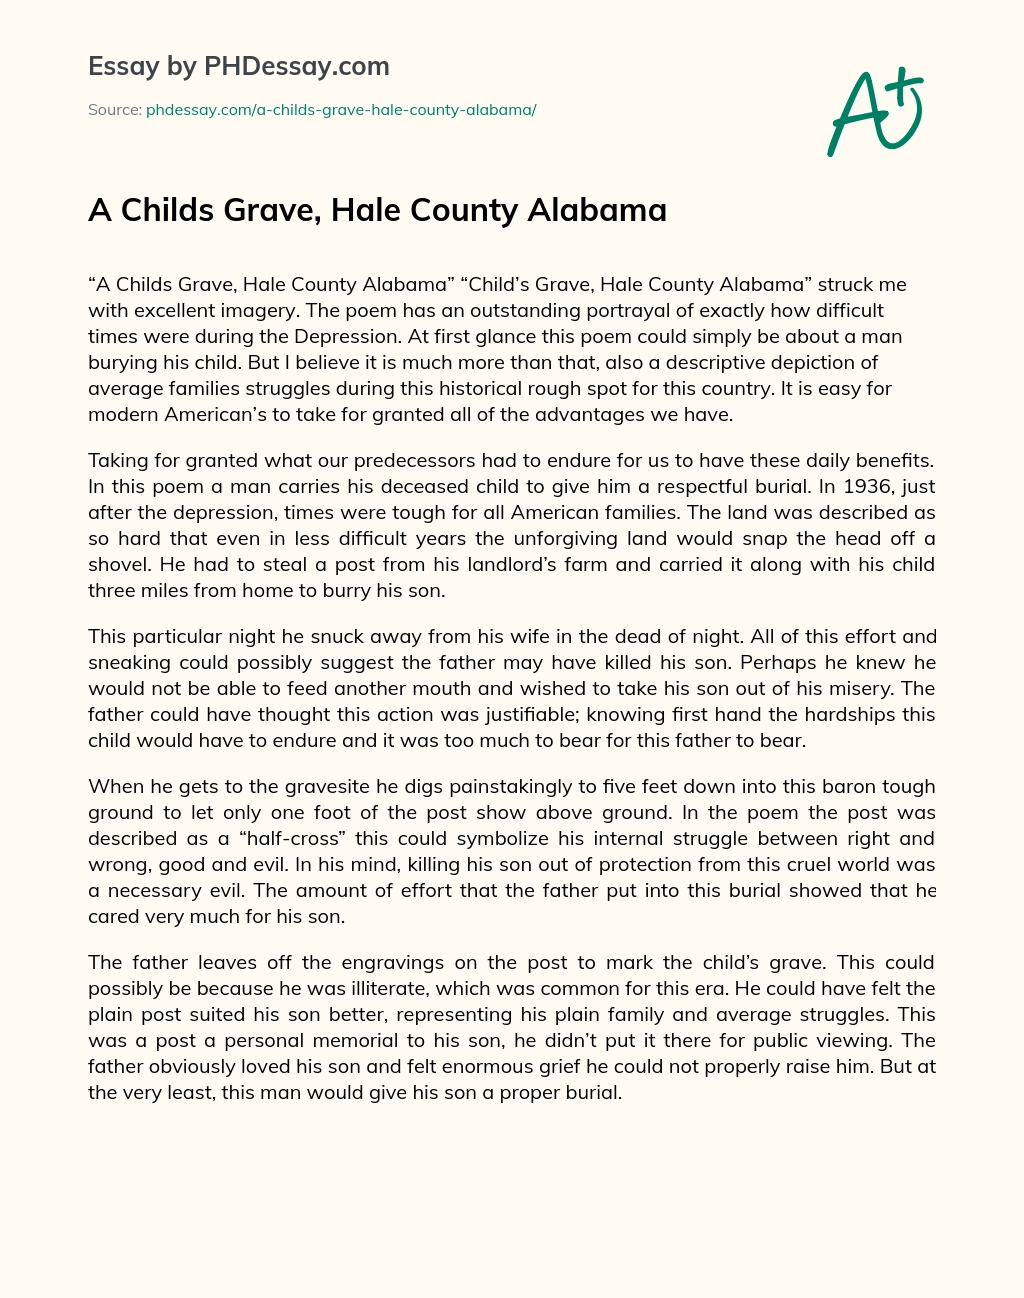 A Childs Grave, Hale County Alabama essay